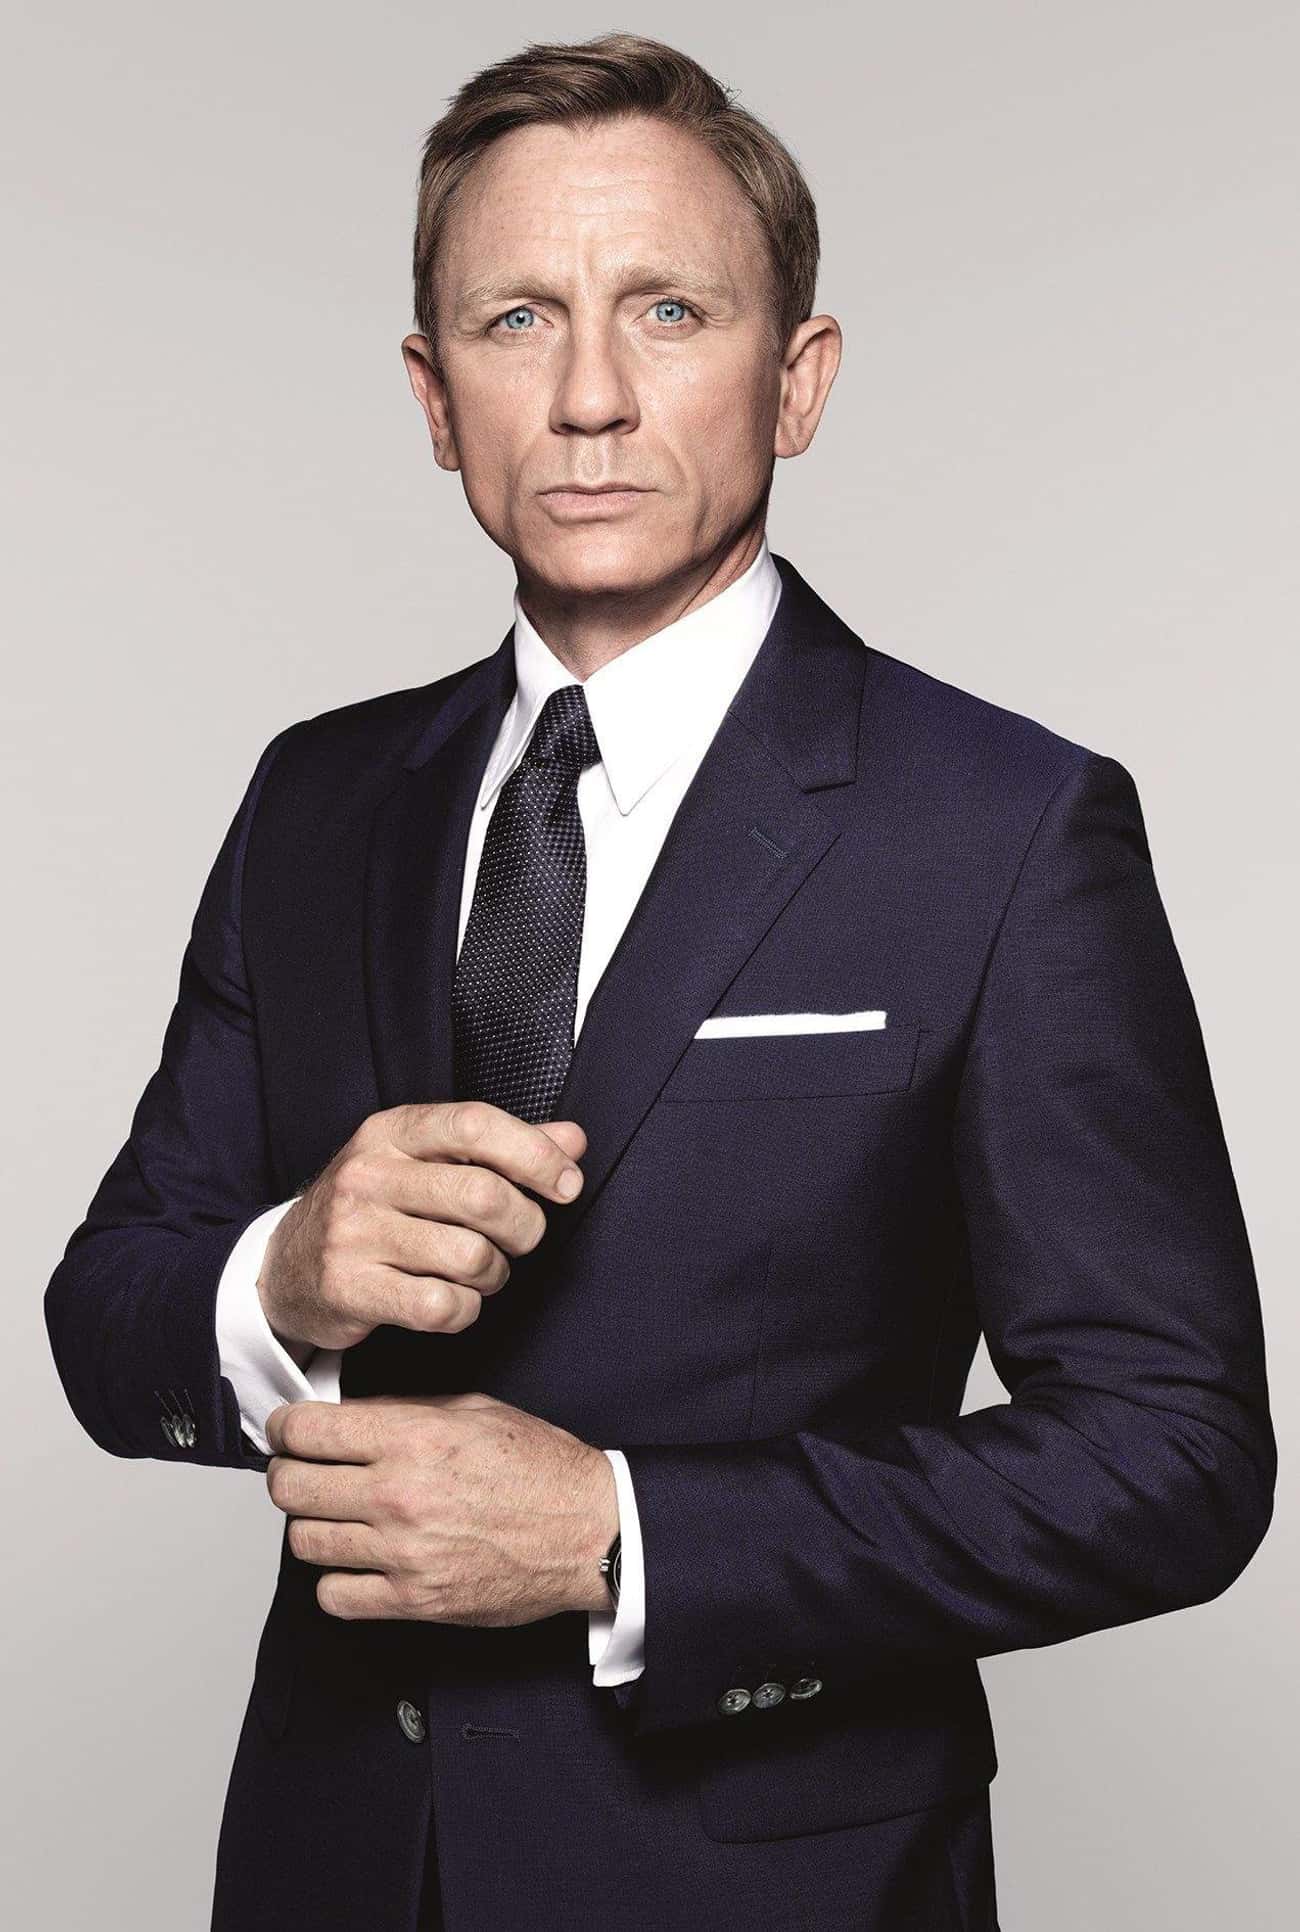 Ranking All 6 James Bond Actors, Best To Worst